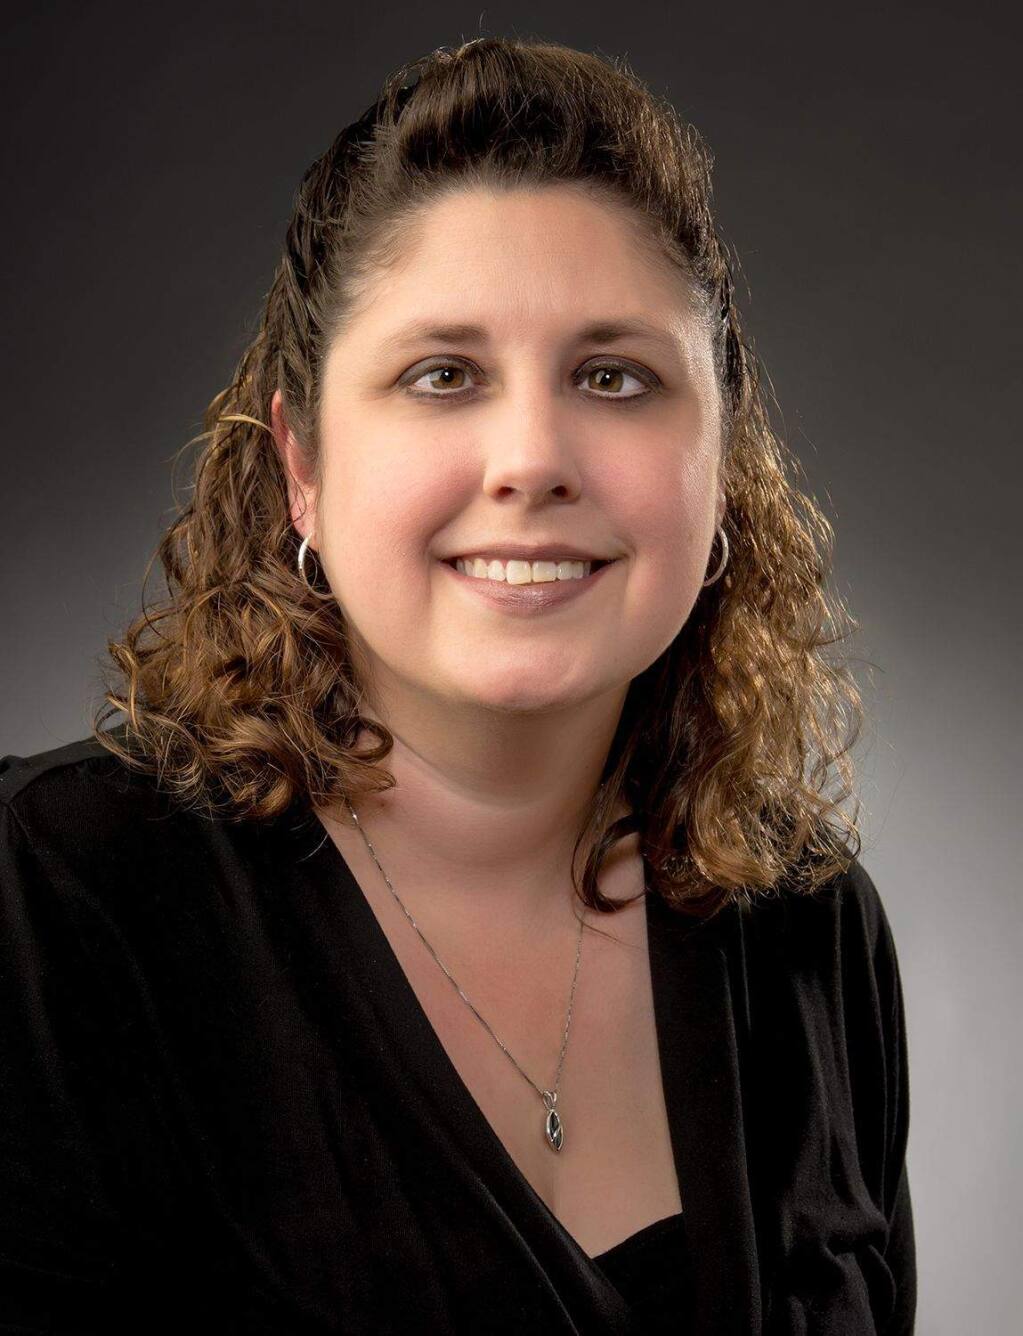 Melissa Von Bima is the human resources manager for Sutter Santa Rosa Regional Hospital.